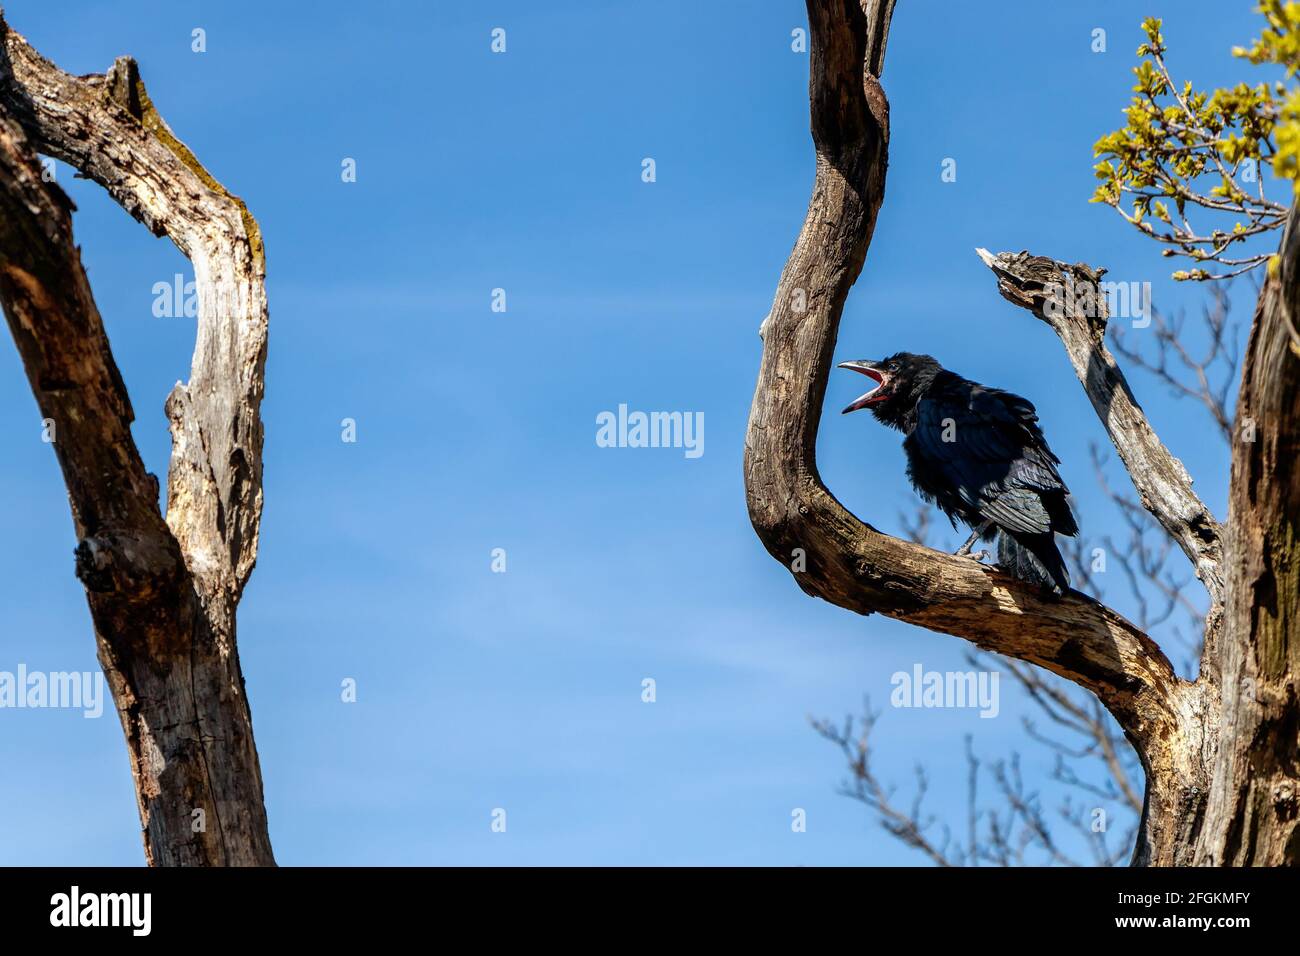 Corvus corax common raven sitting on a dry tree croaking Stock Photo